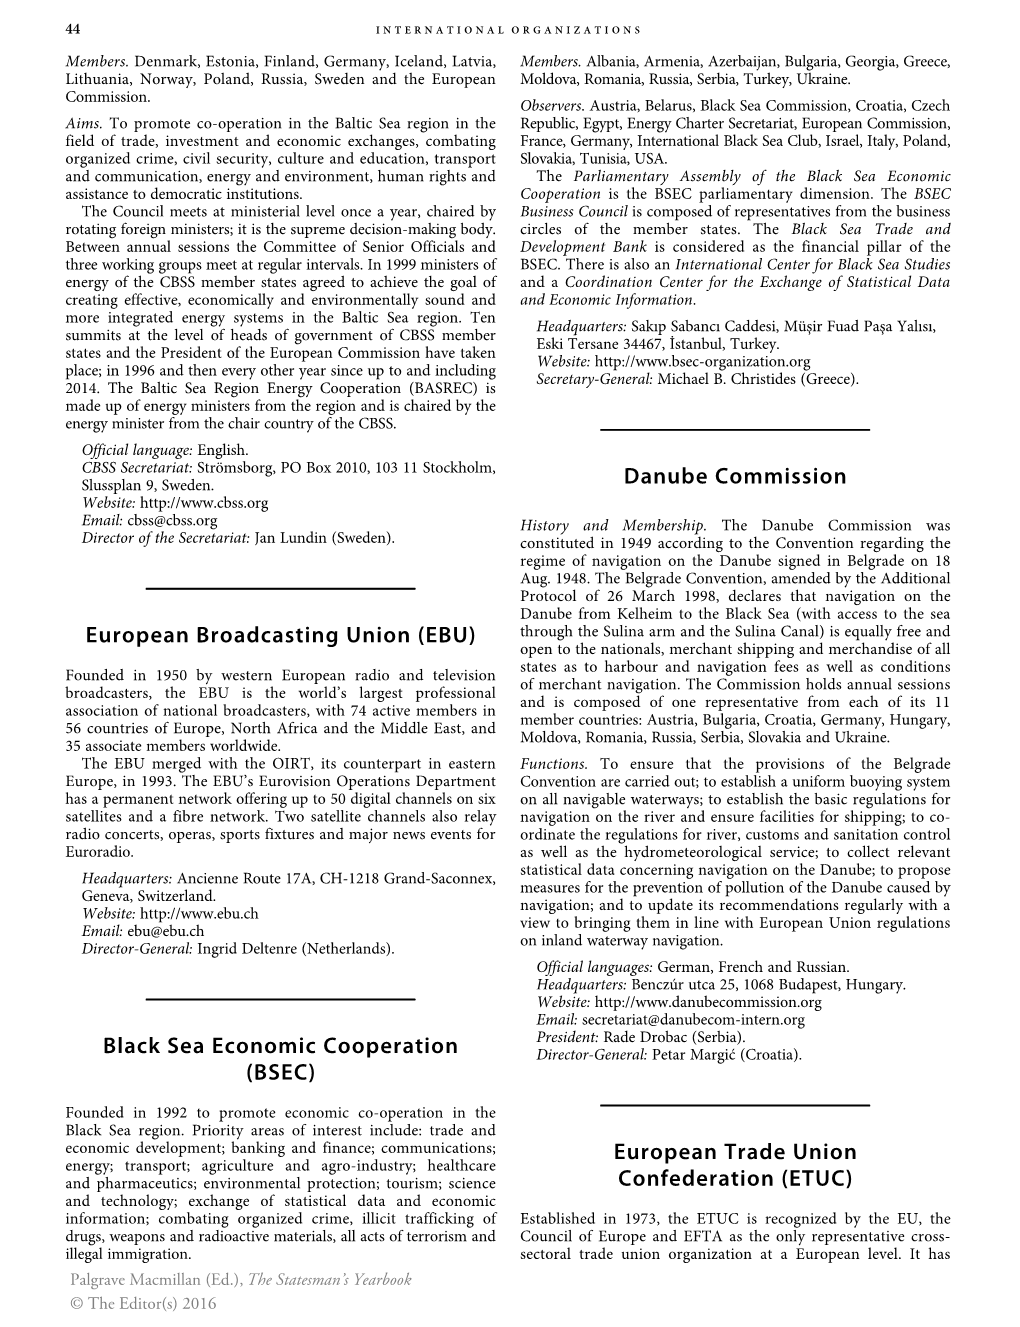 European Broadcasting Union (EBU) Black Sea Economic Cooperation